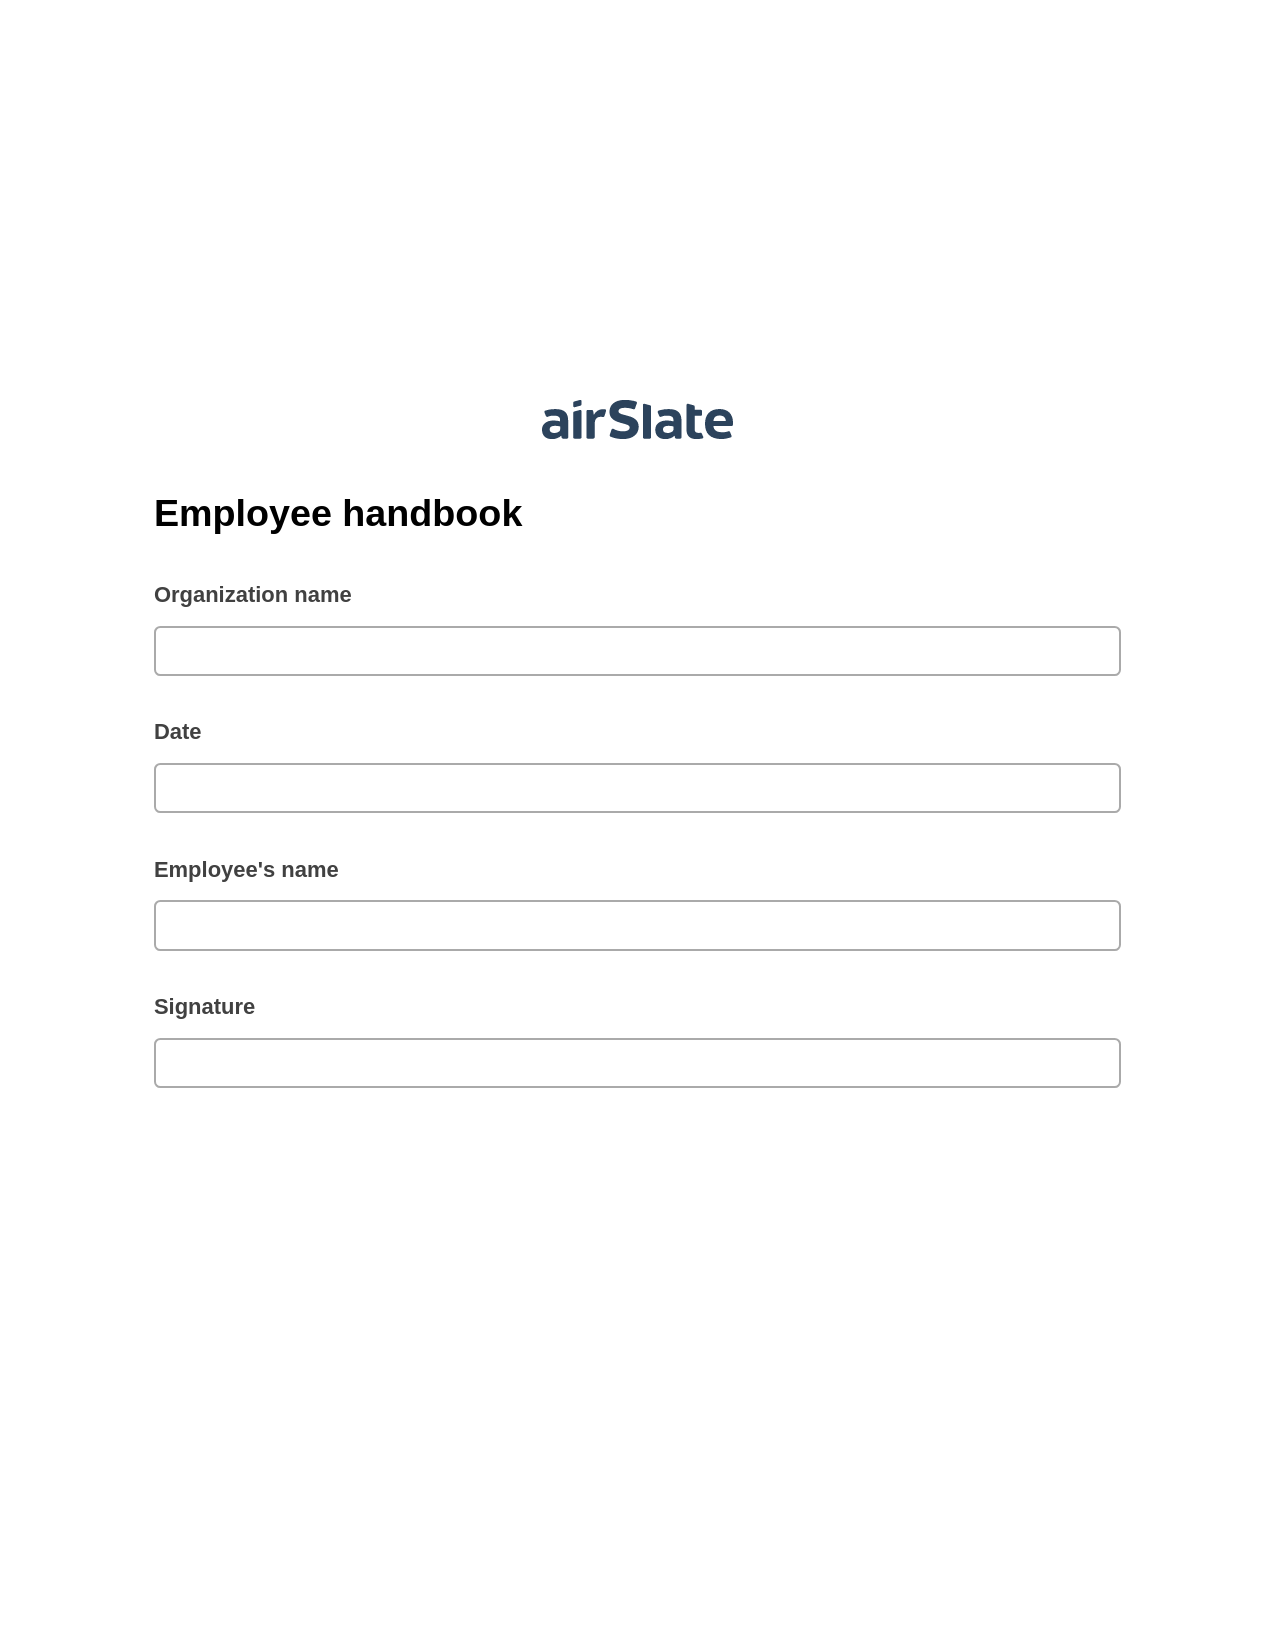 Multirole Employee handbook Pre-fill from MySQL Bot, Assign Slate Name Bot, Export to Google Sheet Bot